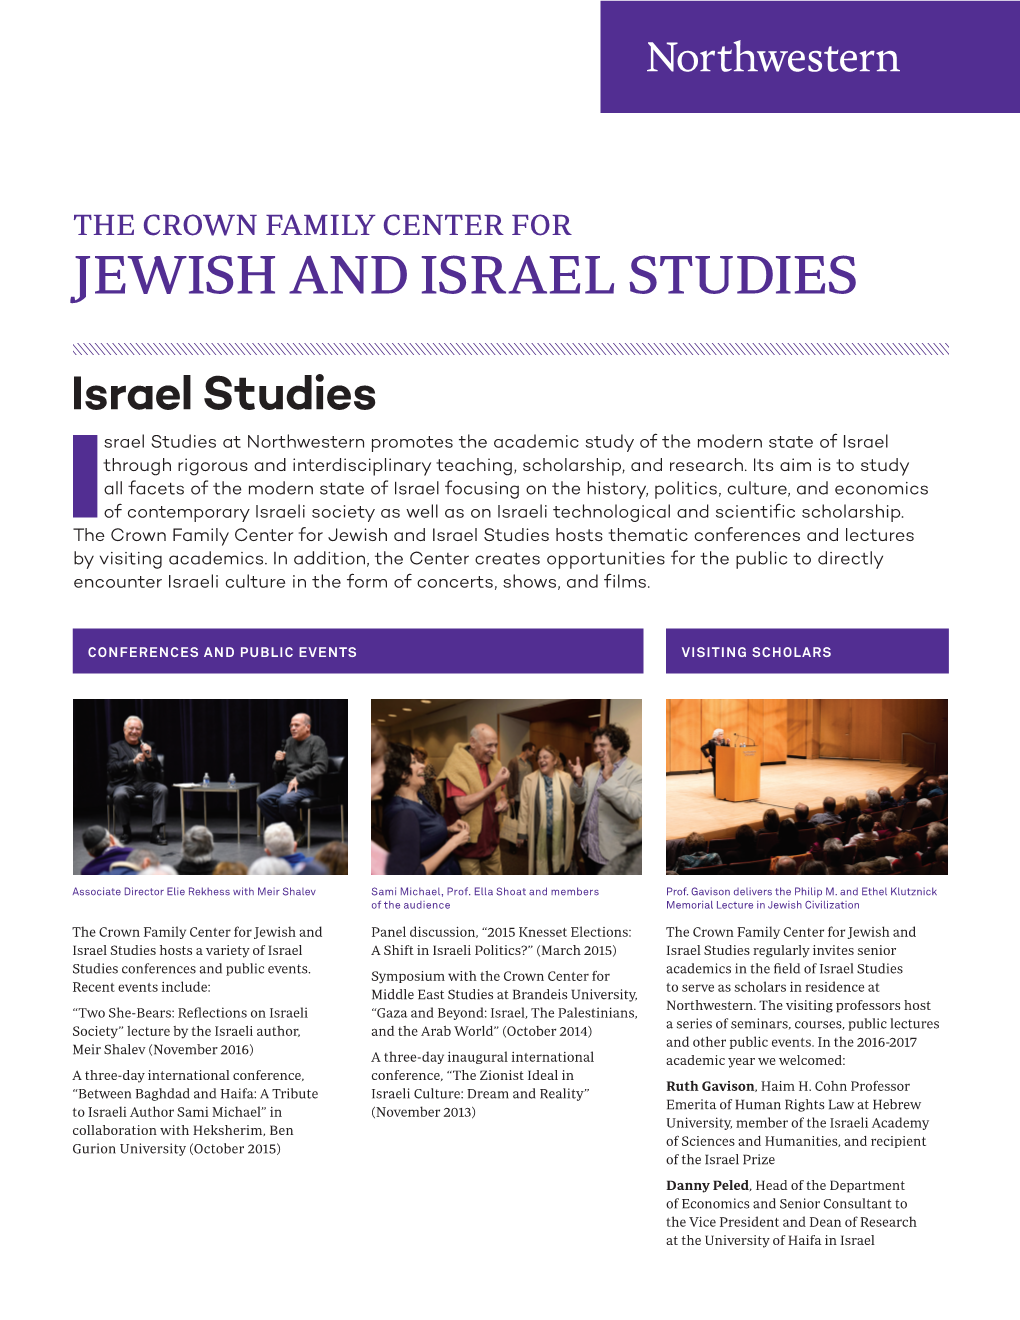 Jewish and Israel Studies